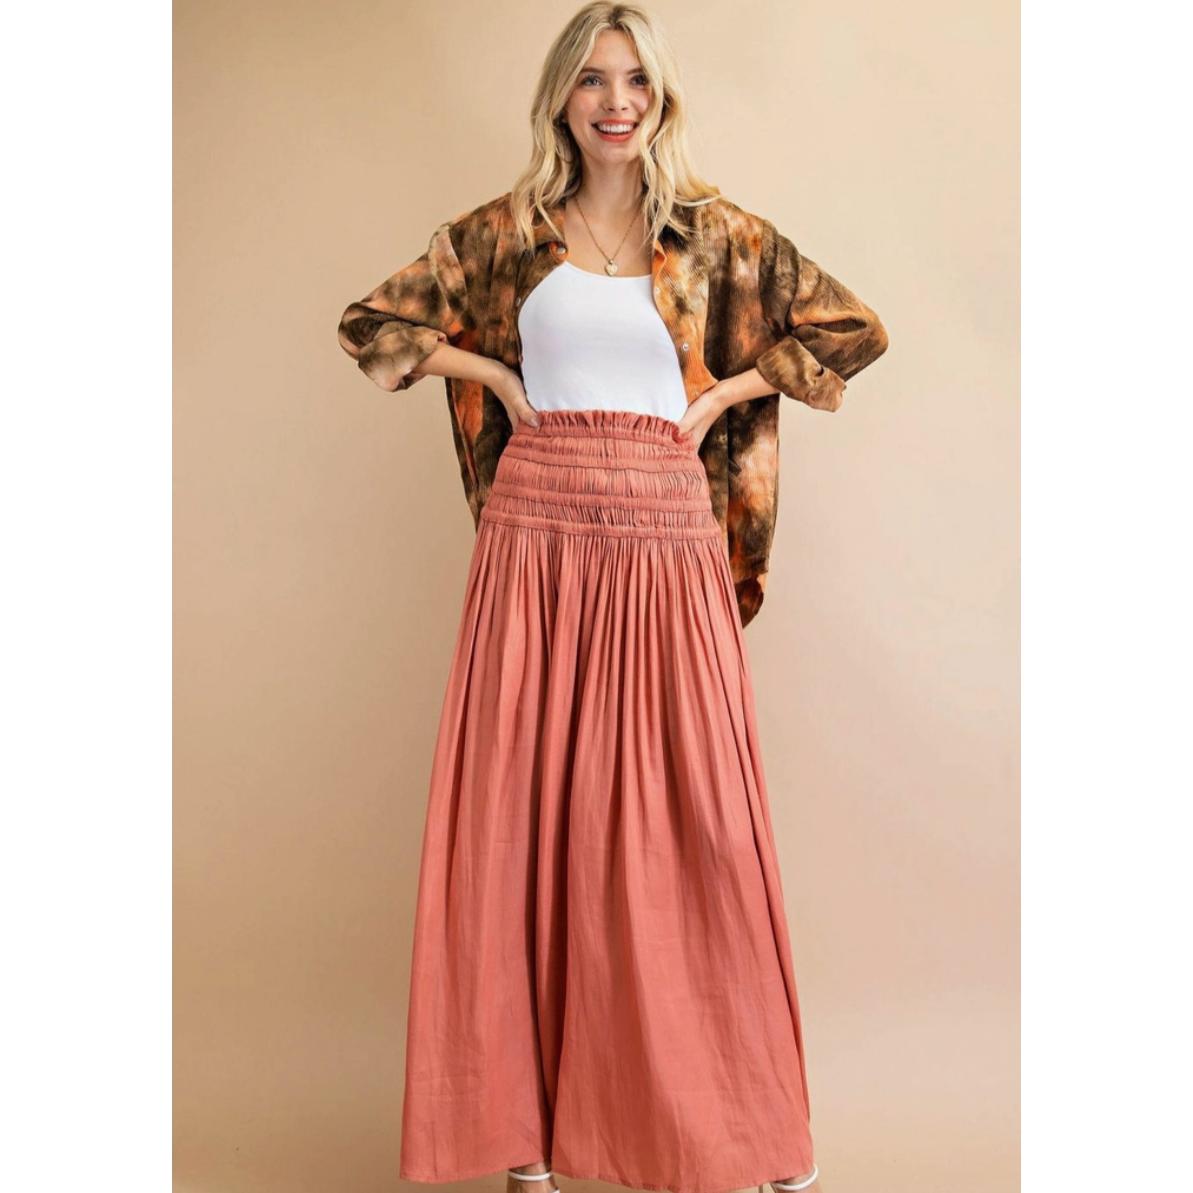 Brick Soft Woven Four Line Elastic Maxi Skirt